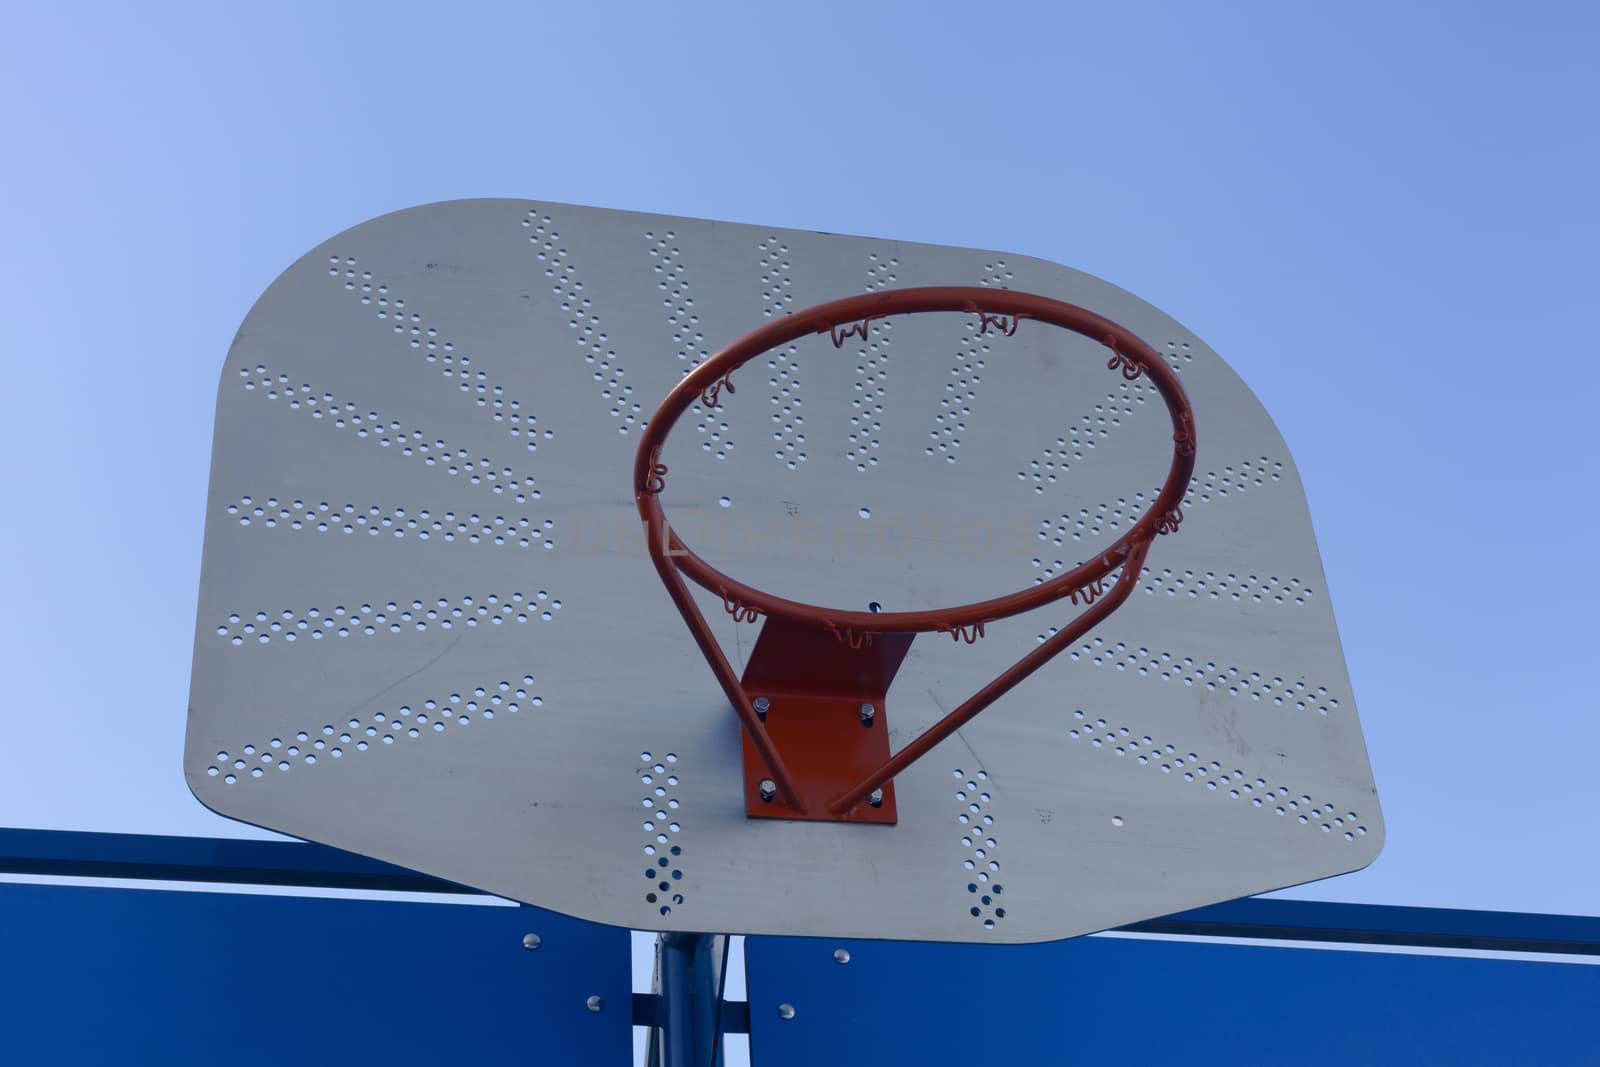 Outdoor basketball hoop against a blue sky - street basketball by Tjeerdkruse